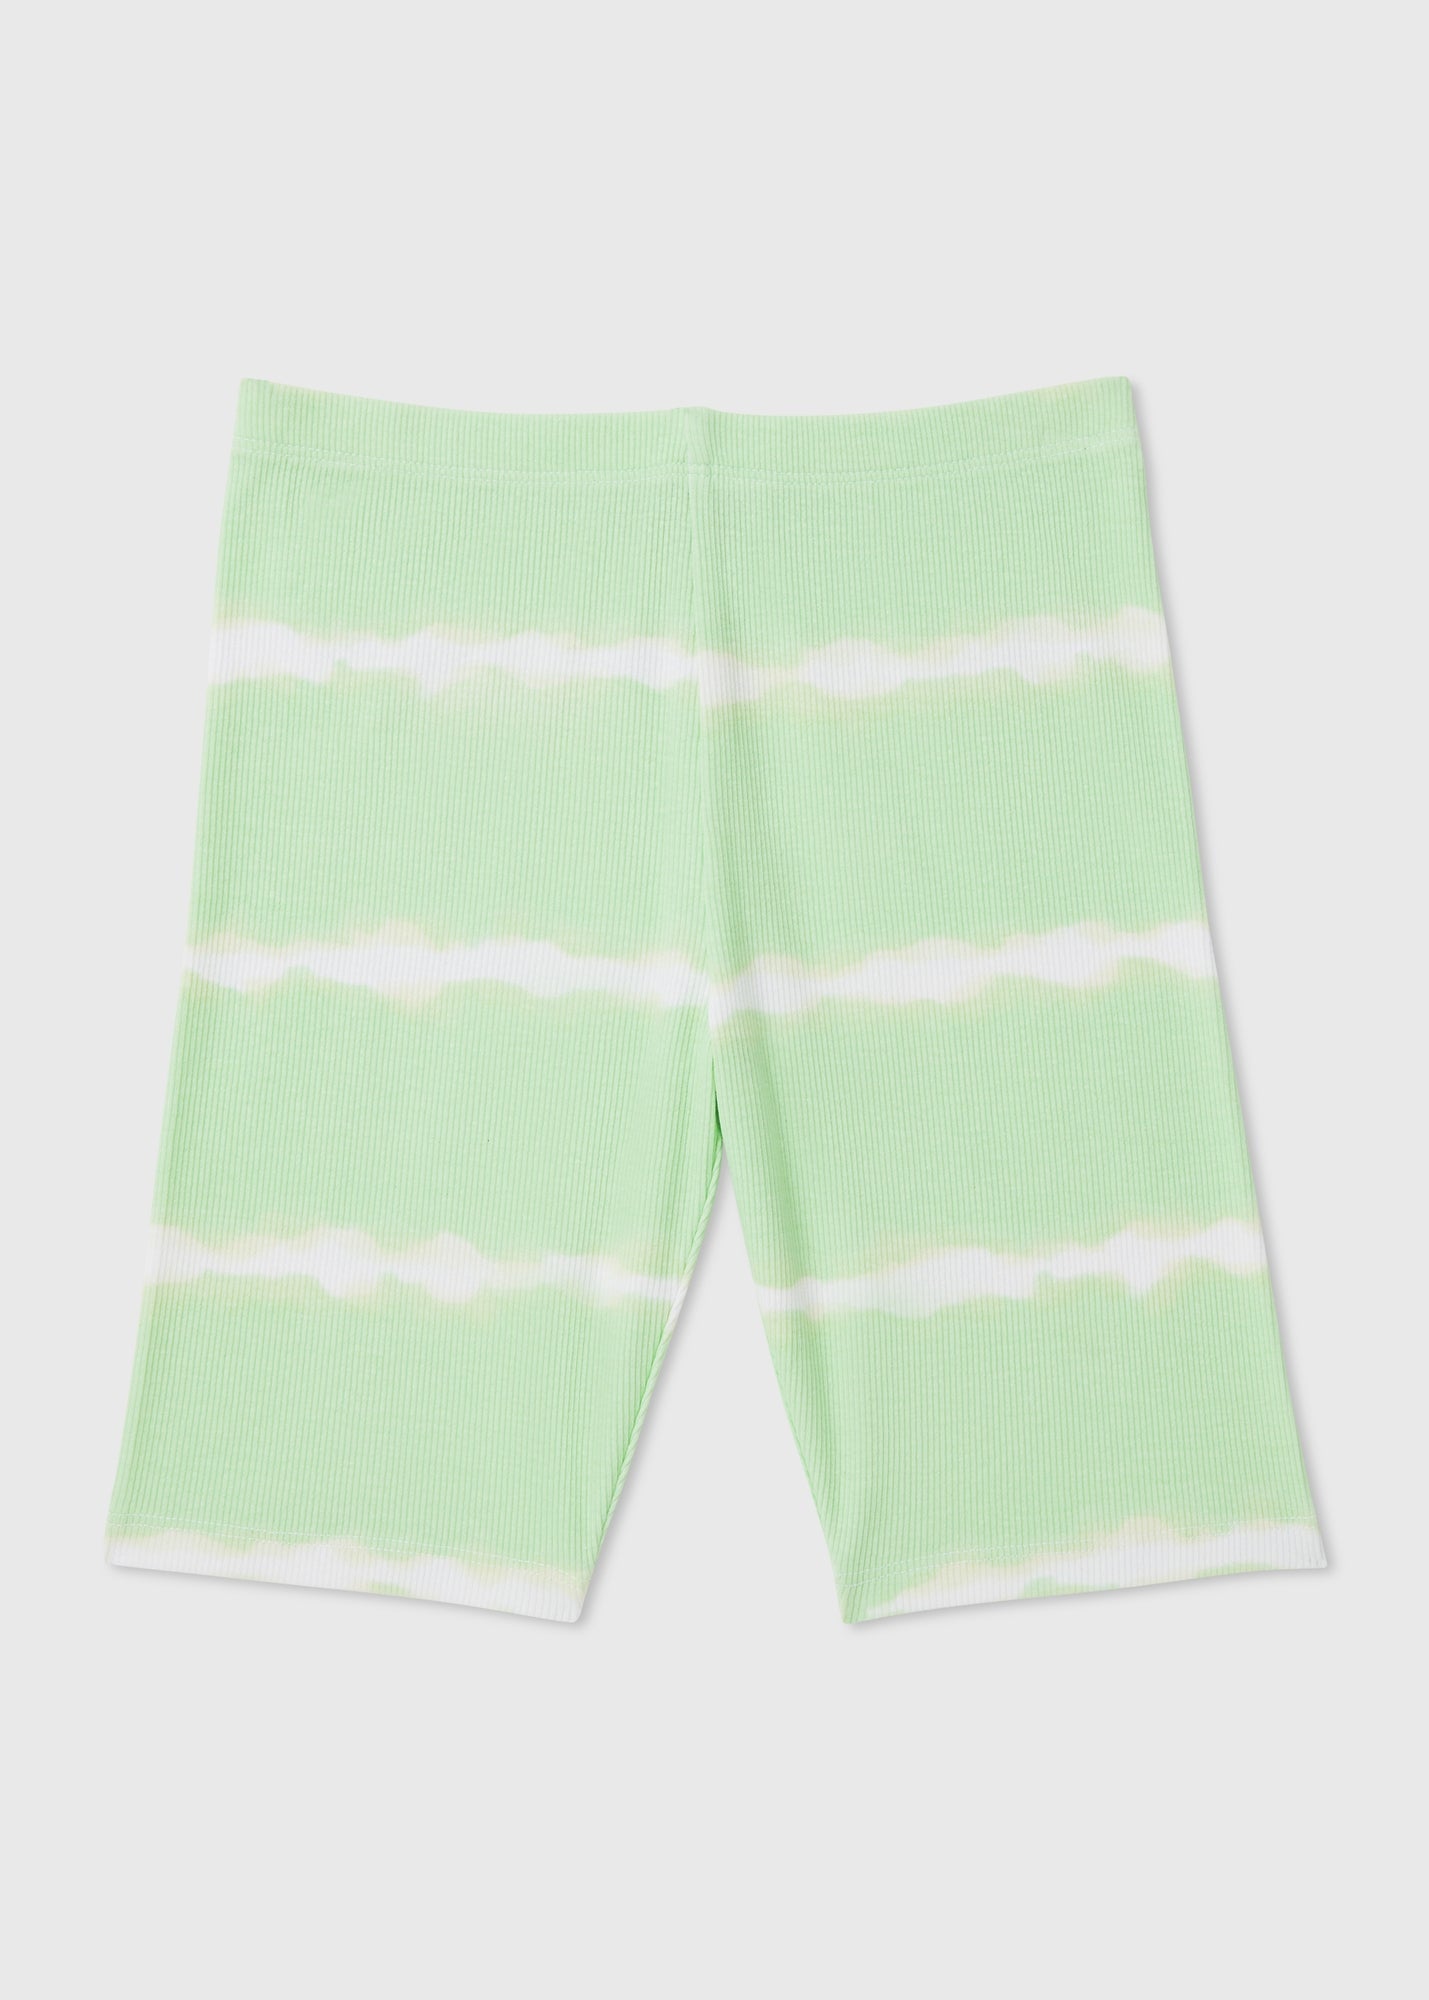 Girls Green Tie Dye Shorts (7-13yrs)  G402691